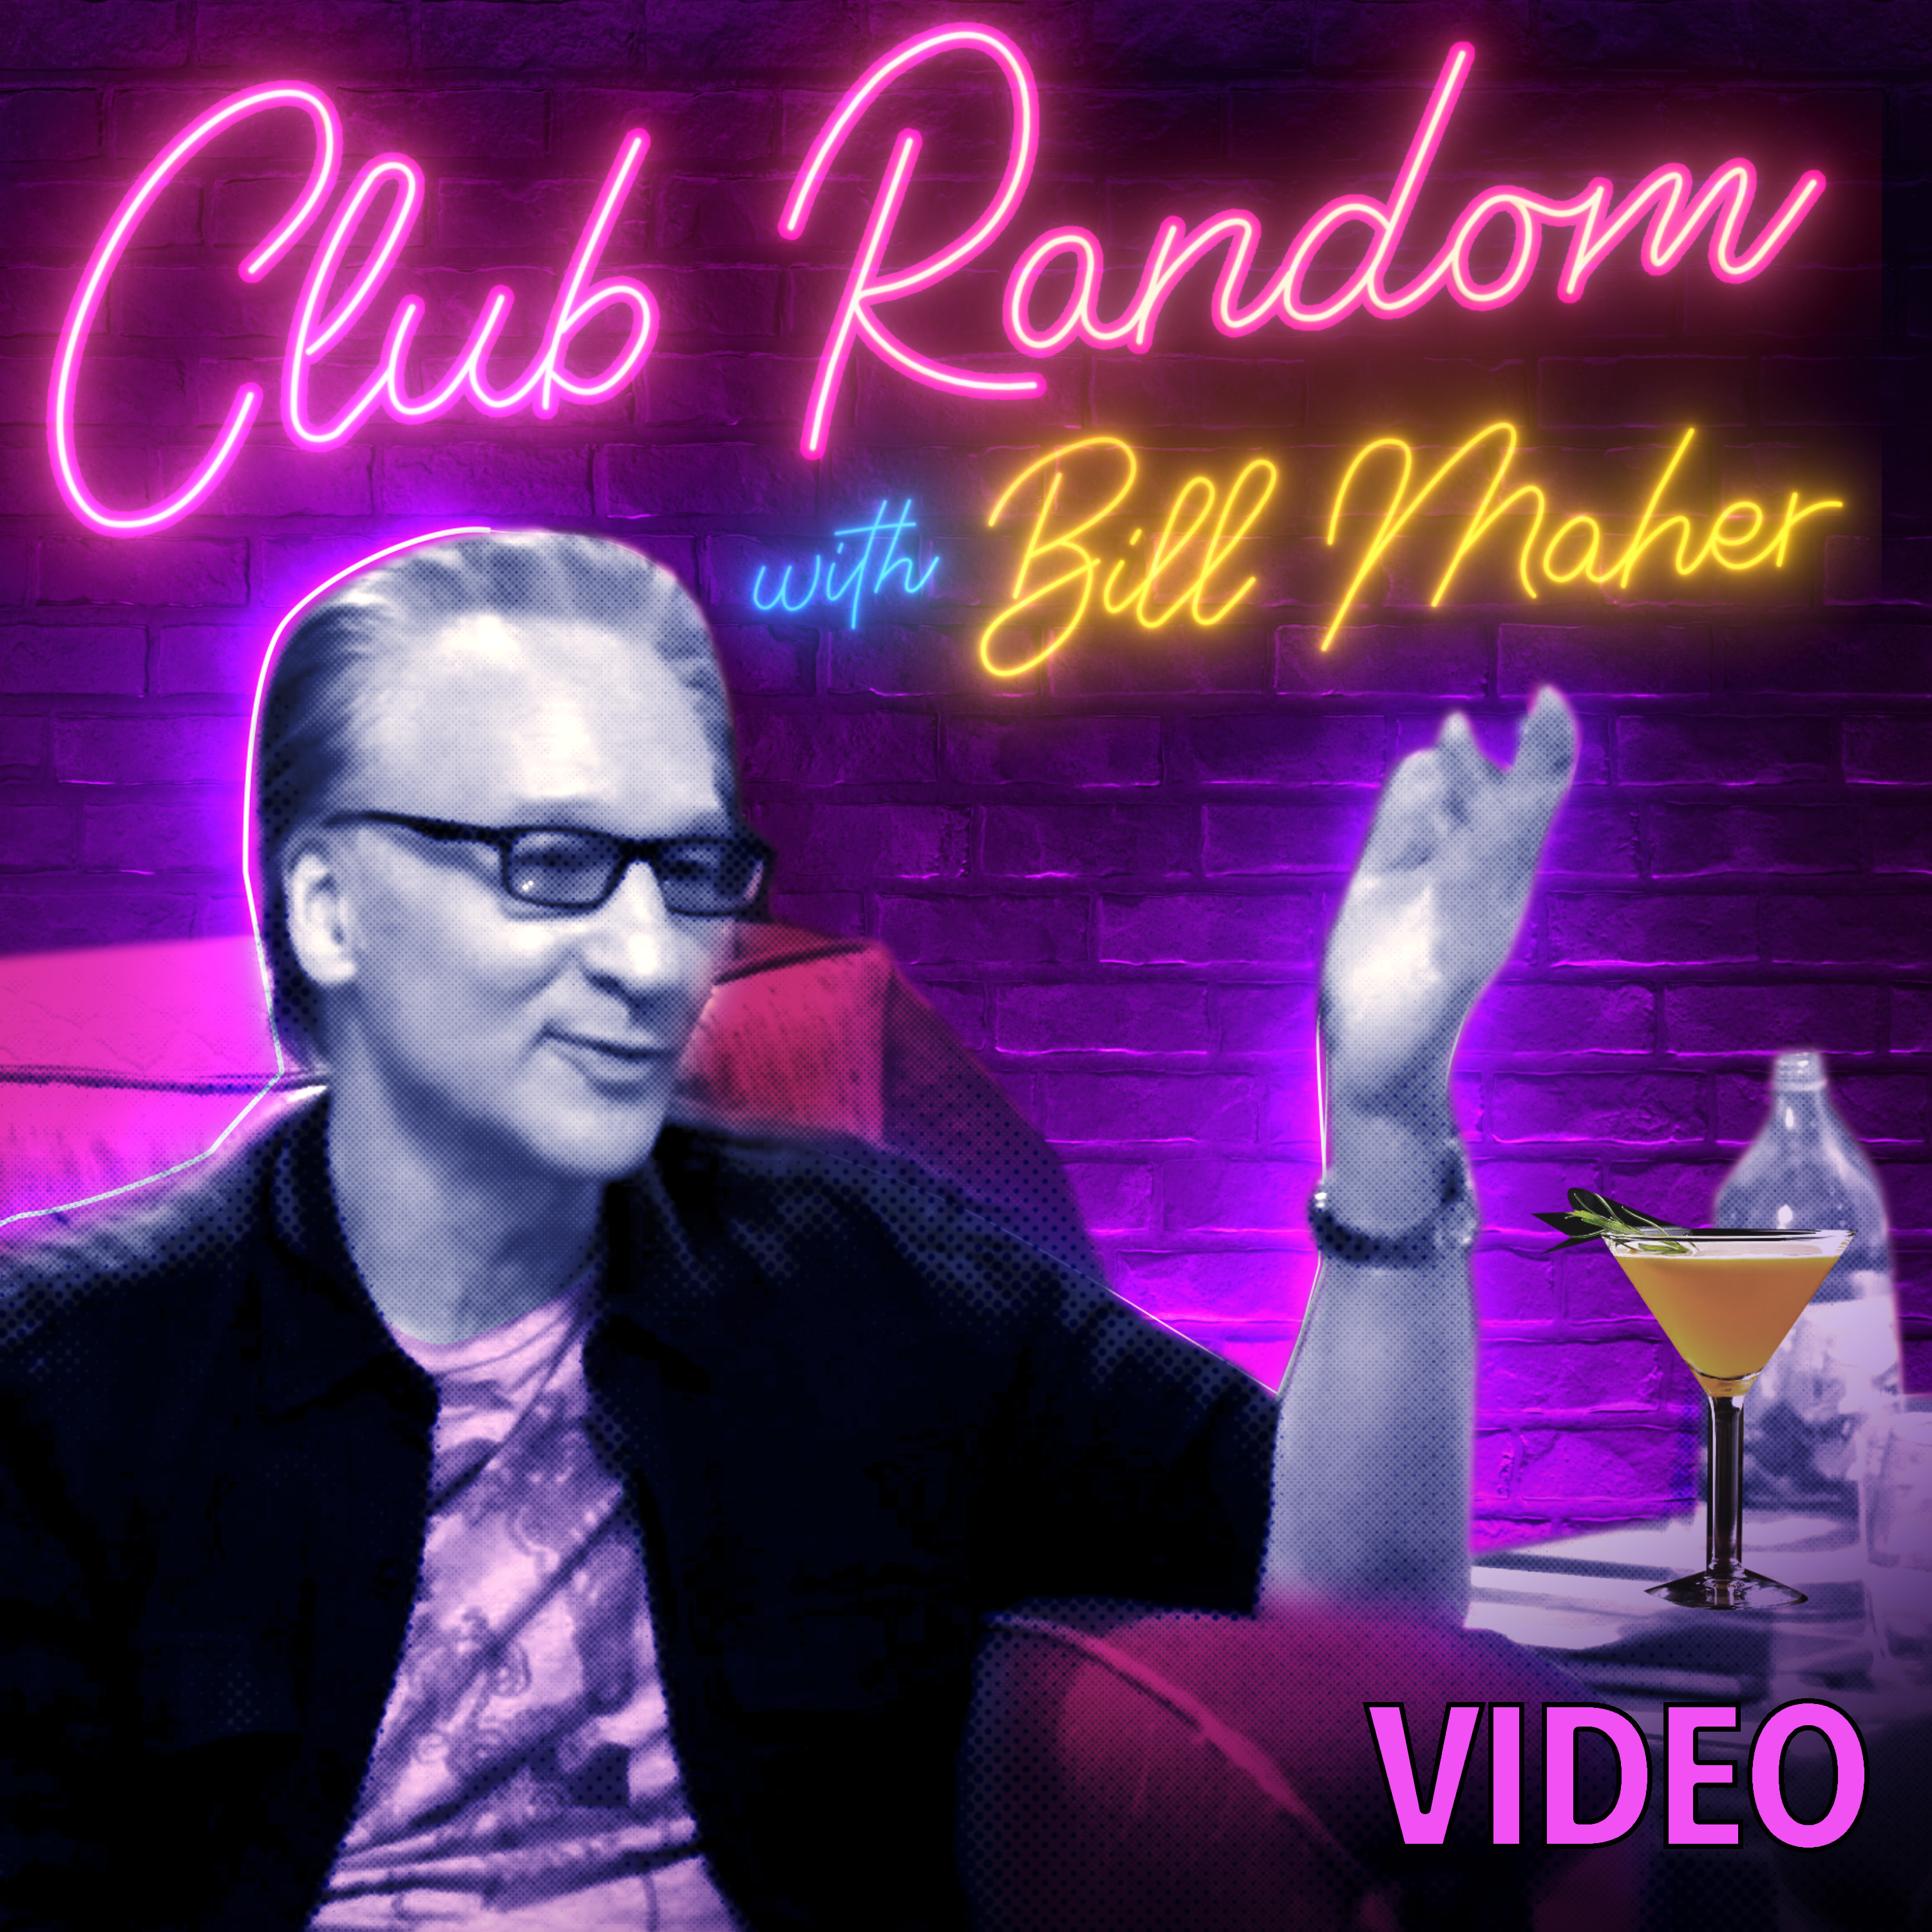 Video: Jerry Seinfeld | Club Random with Bill Maher